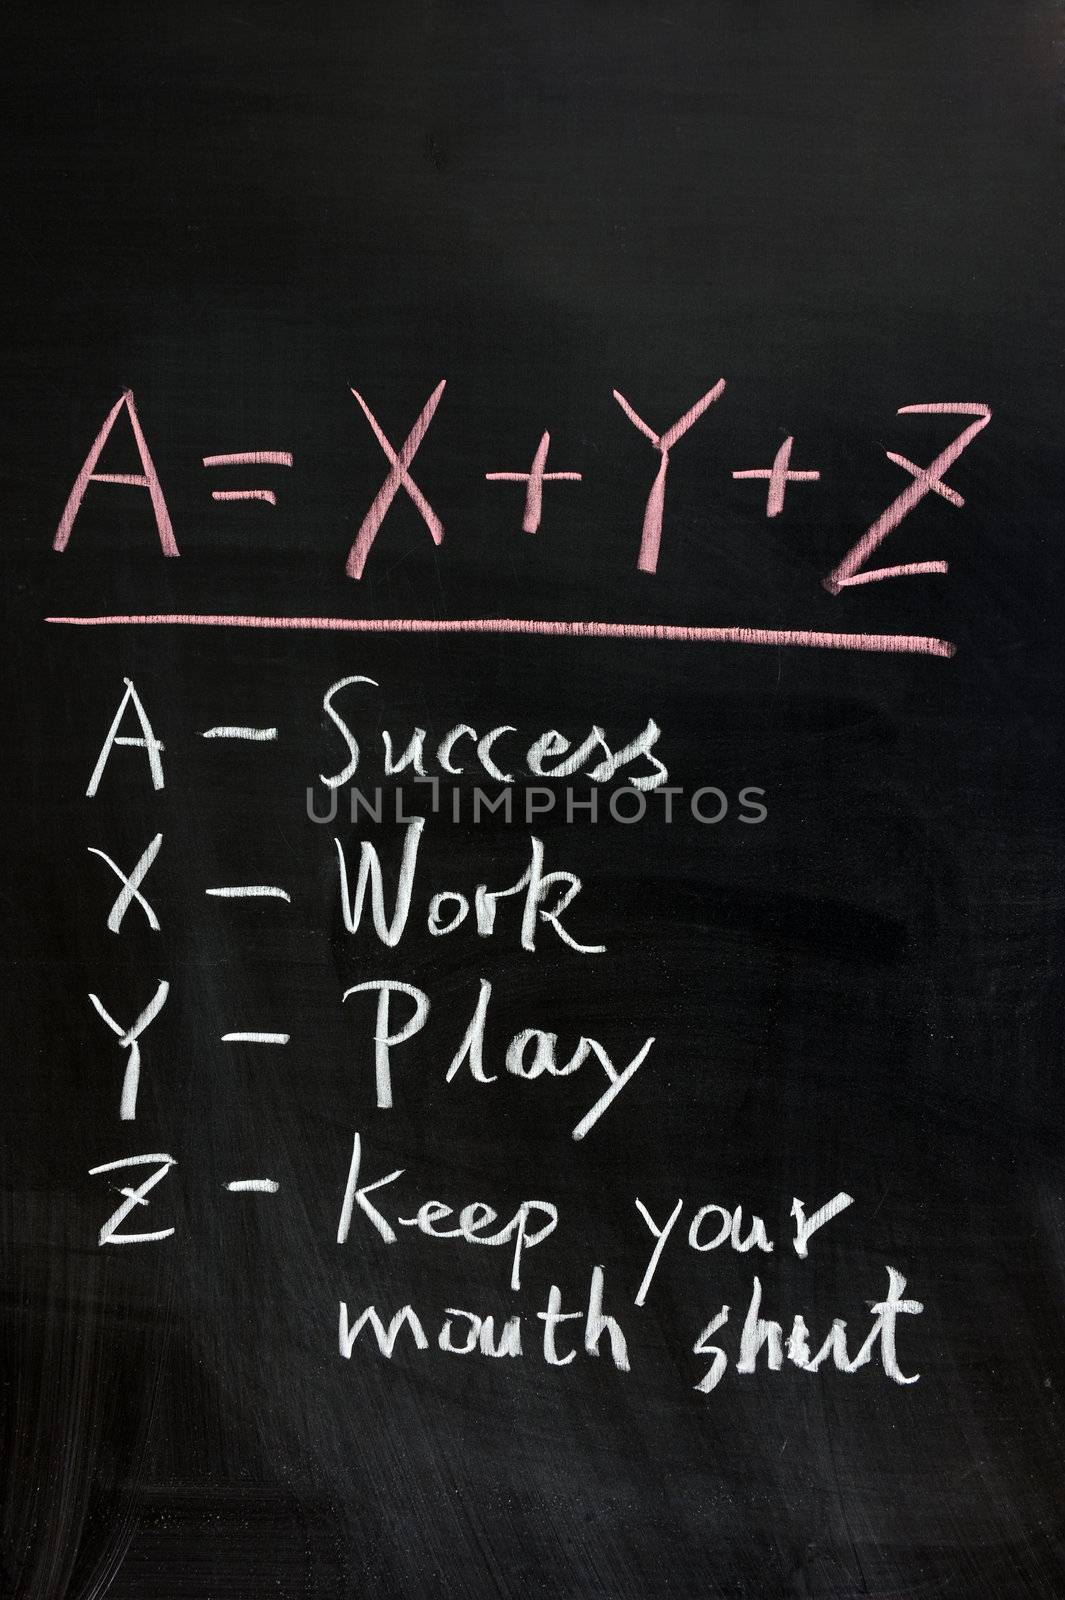 Chalk drawing - Formula of success, which is originally from Albert Einstein